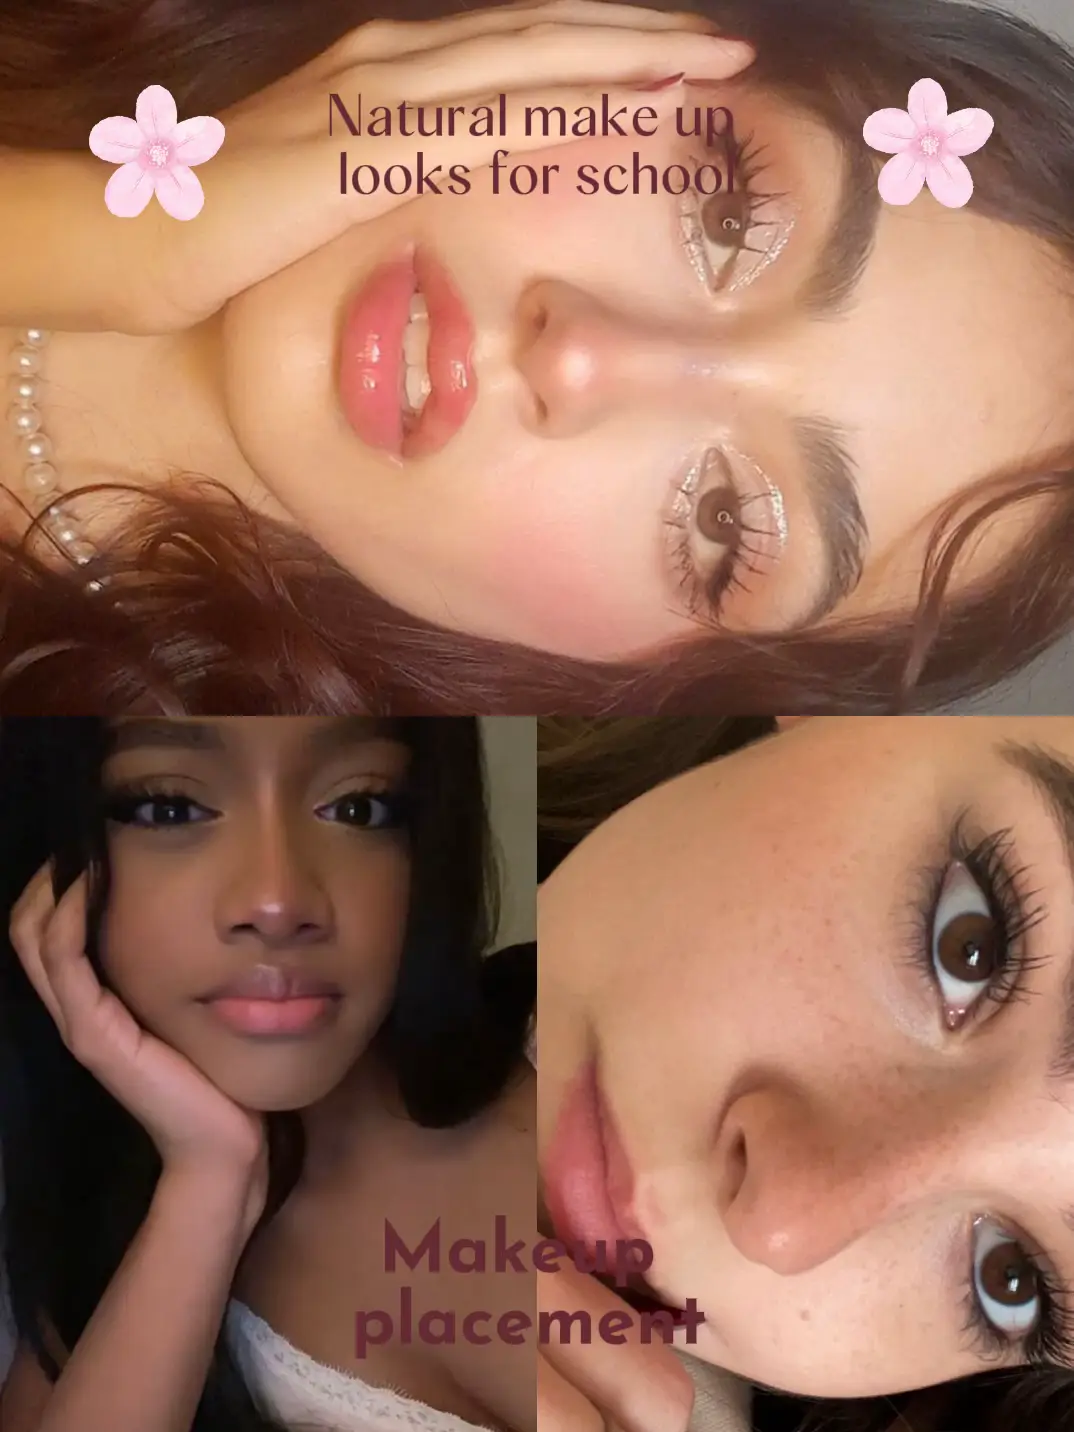 Natural makeup look + products used 🫶🏻 #grwm #makeuptutorial